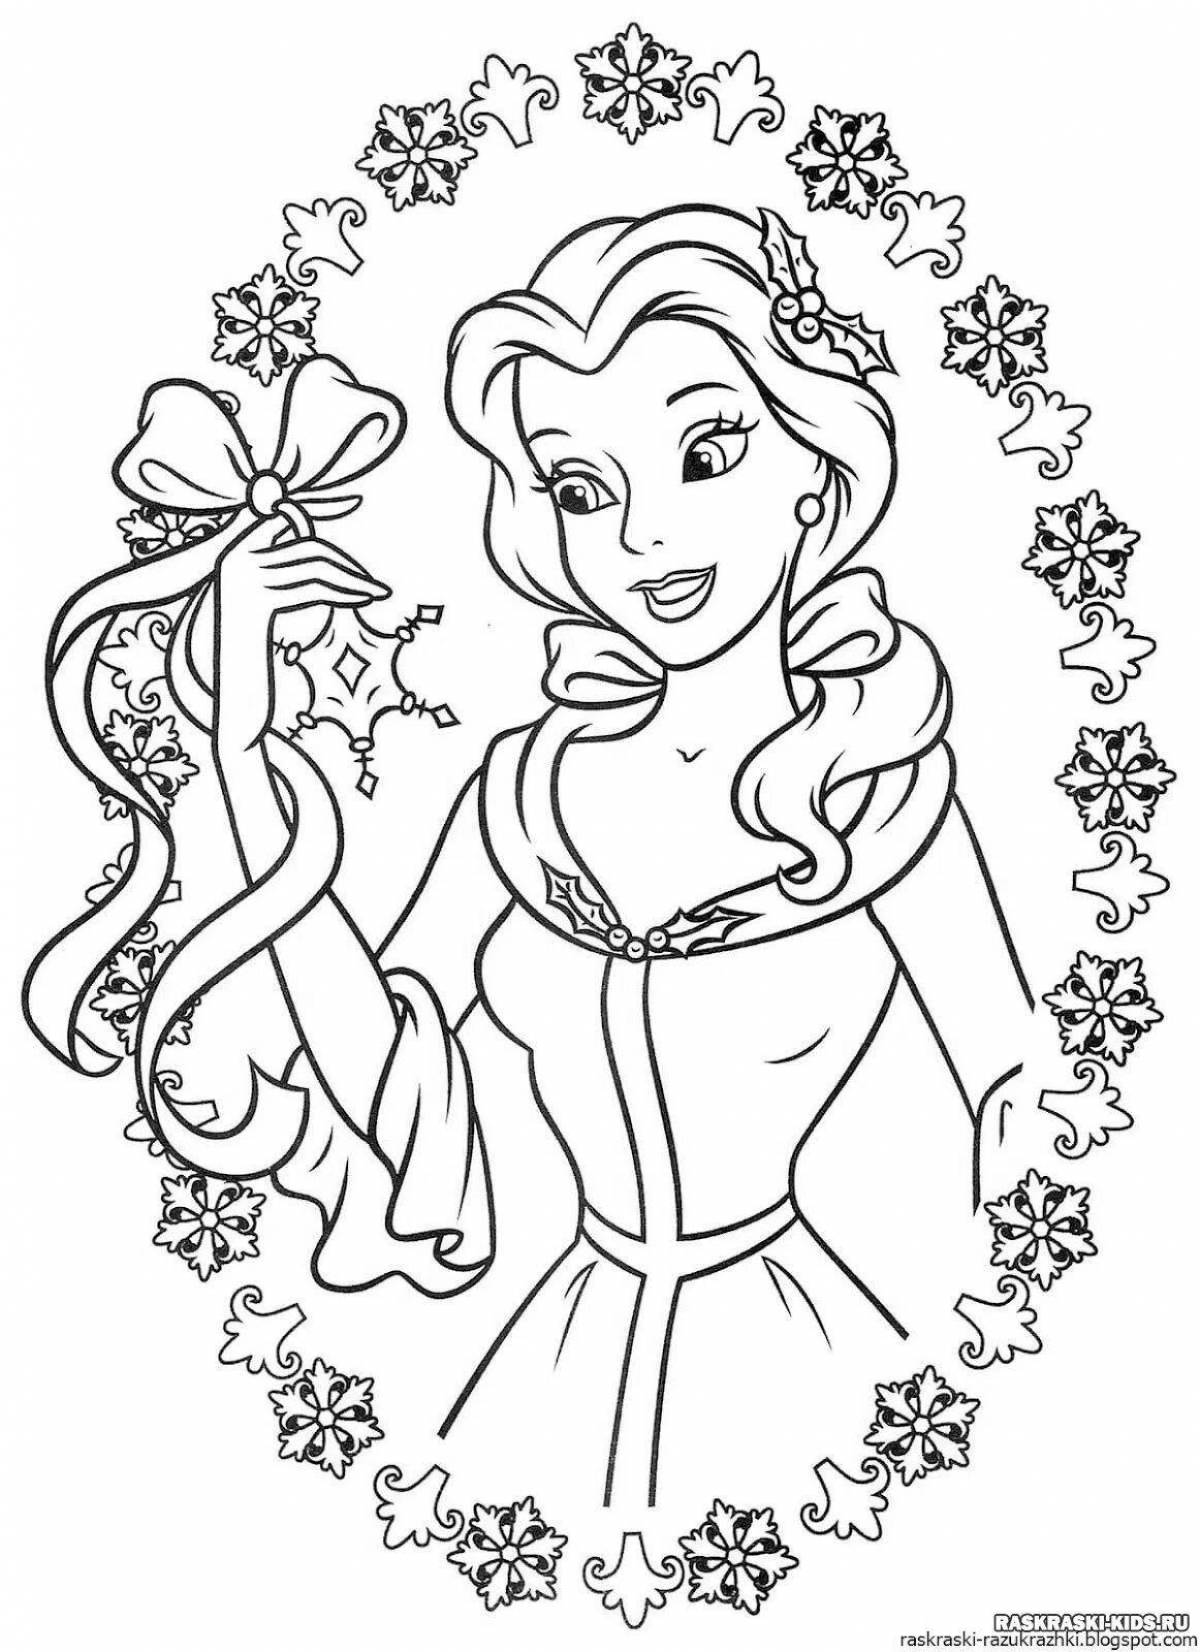 Shiny princess coloring pages